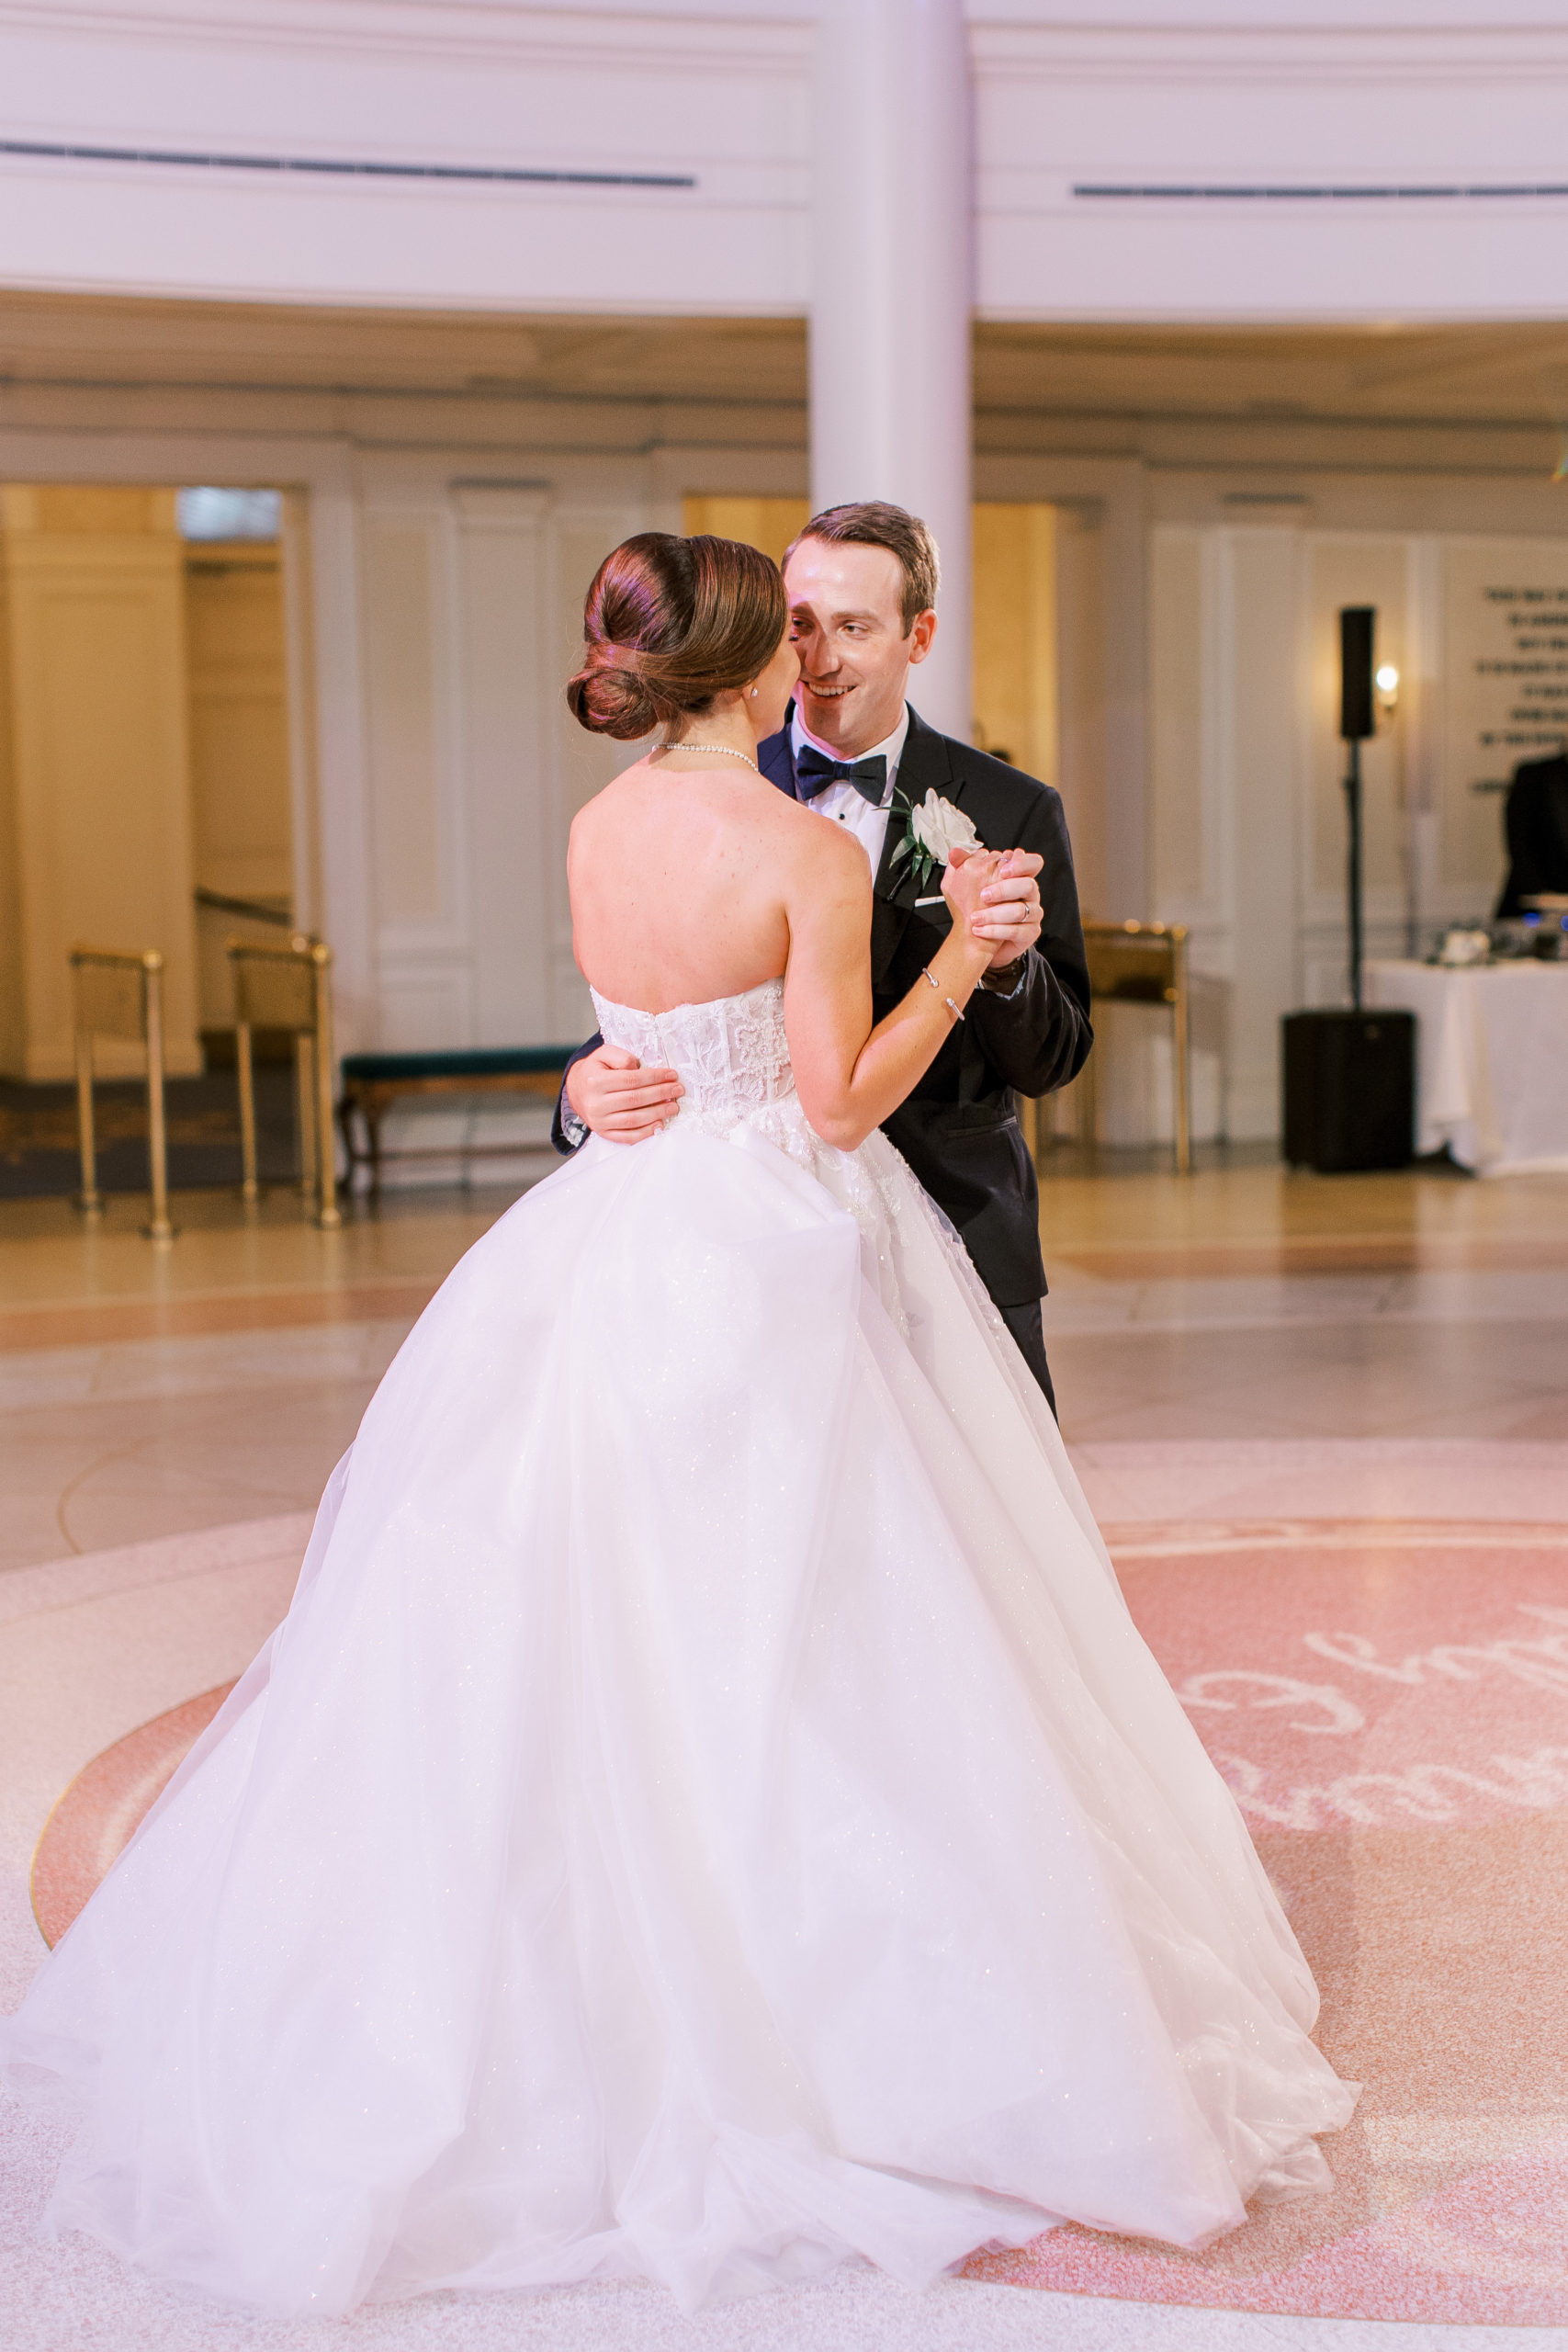 Bride and groom share a dance on dance floor 